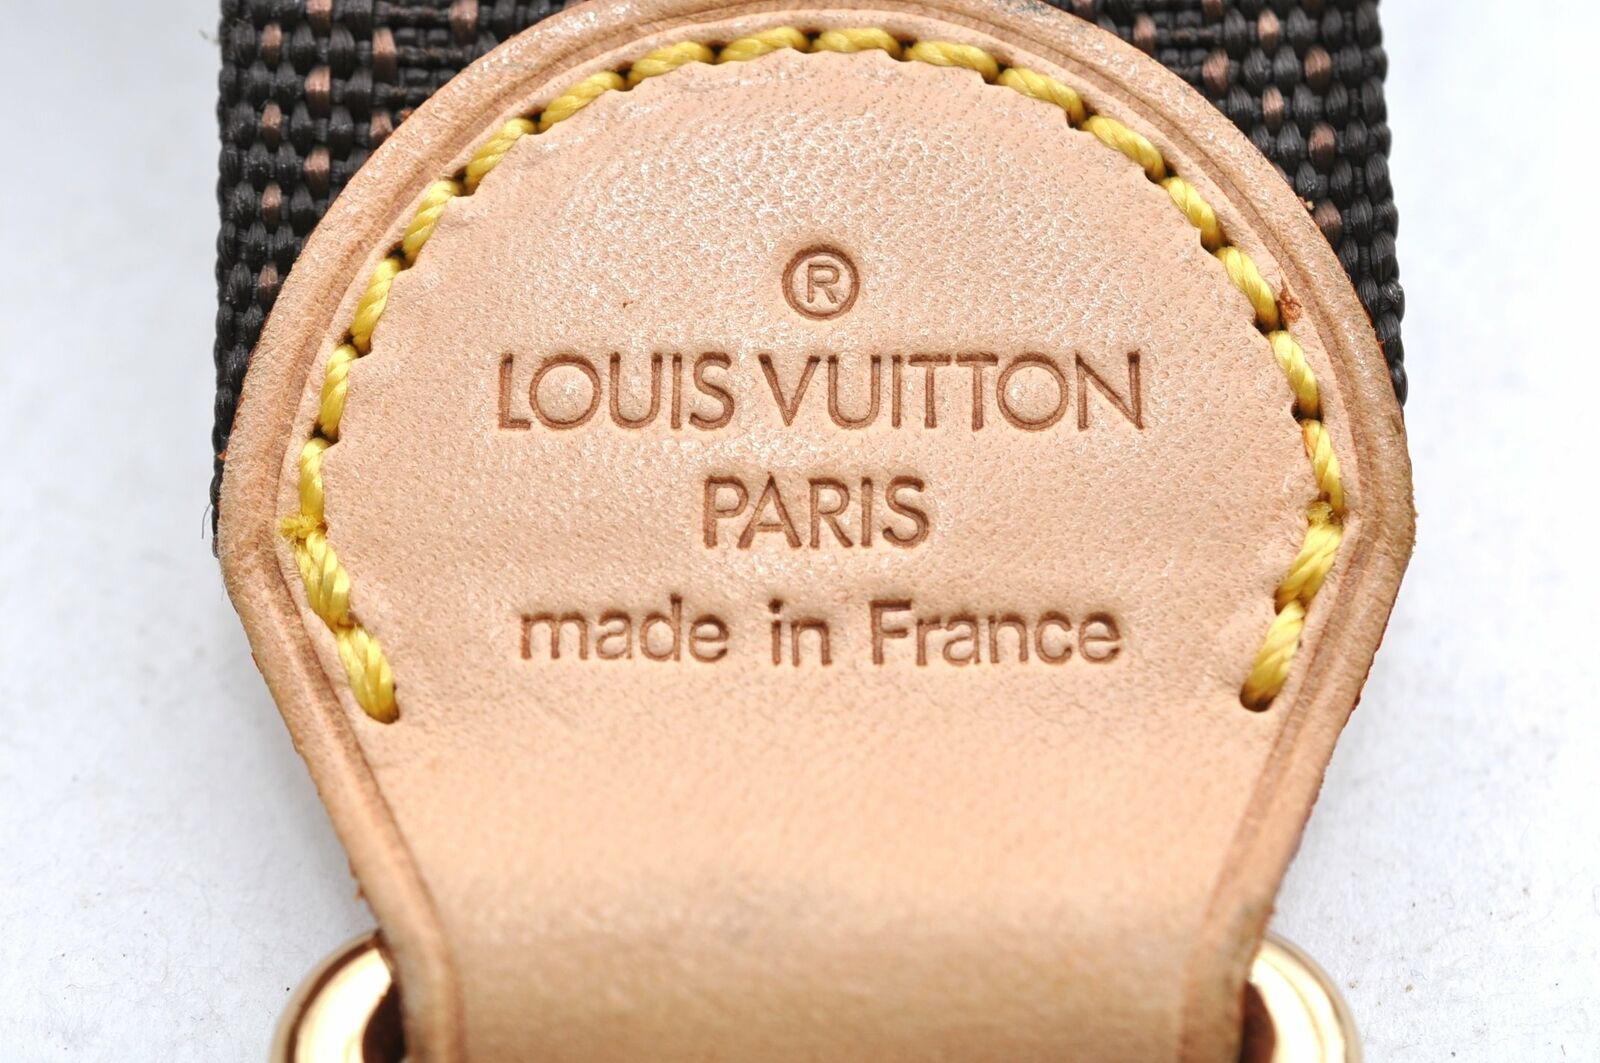  Louis Vuitton Straps Replacement